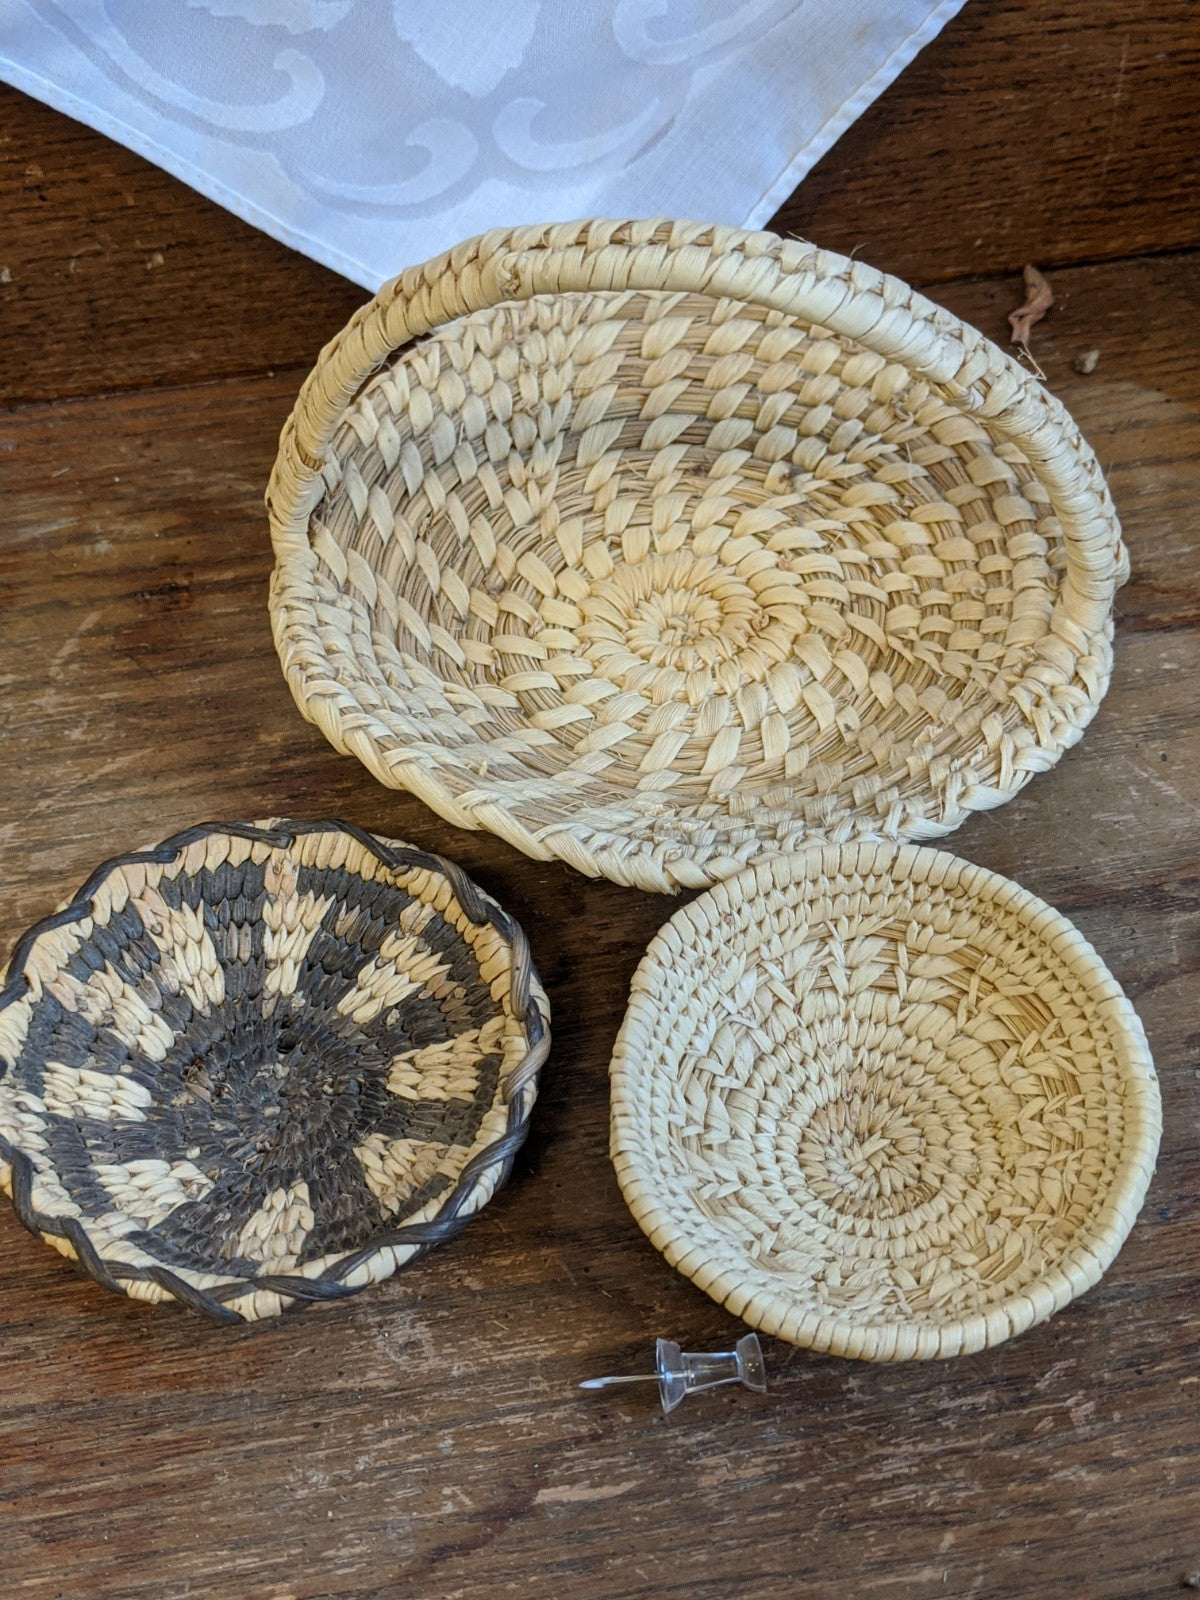 Native American grass-weave mini-baskets